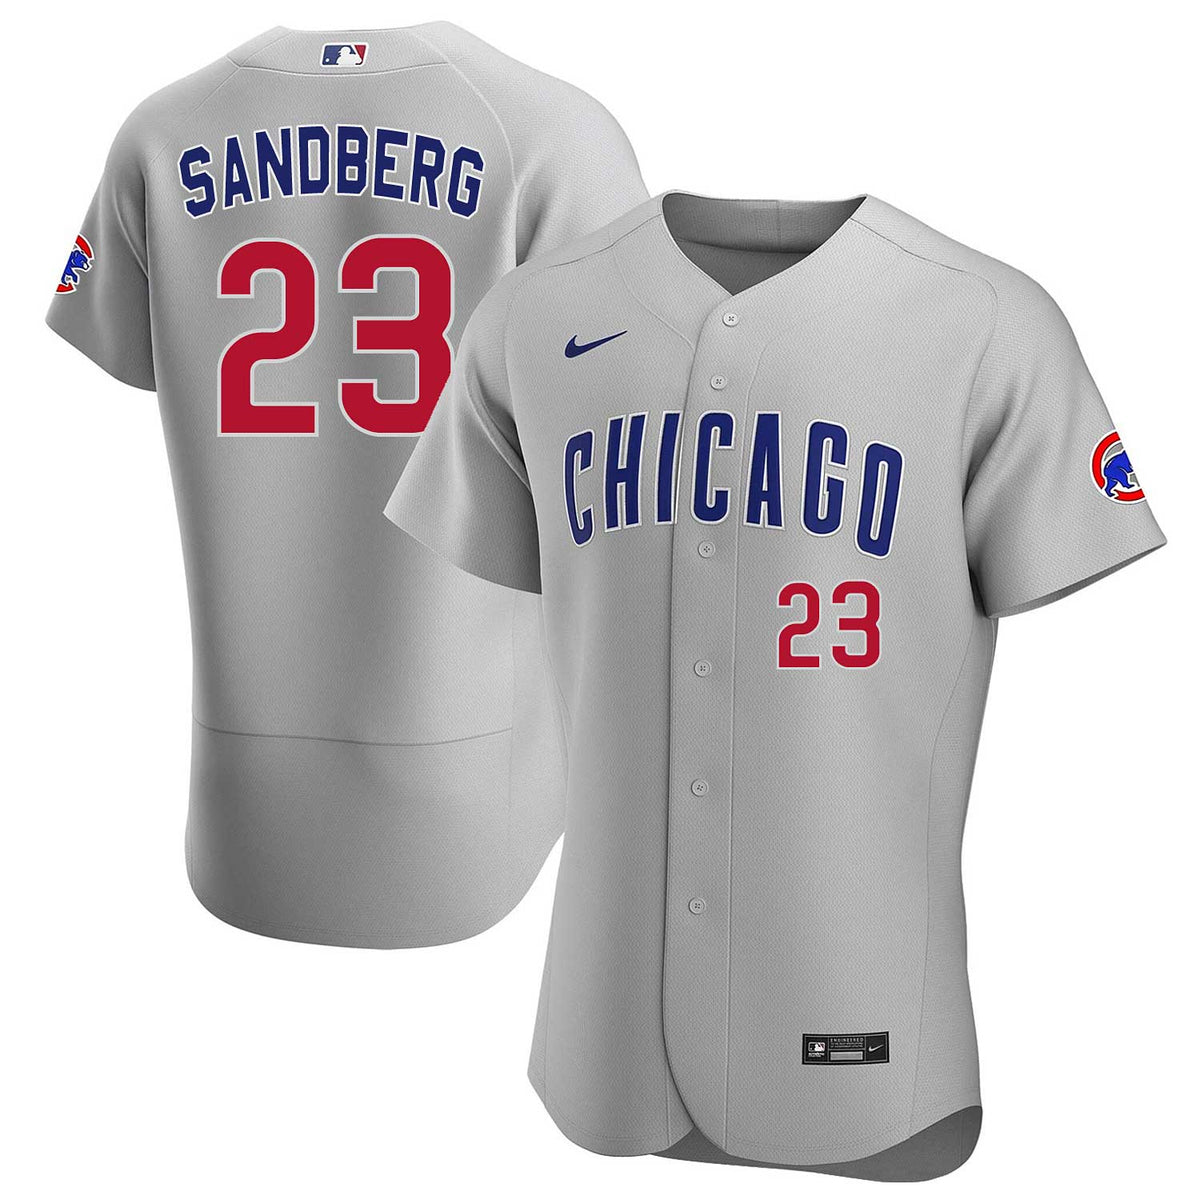 MLB Nike Chicago Cubs #23 Ryne Sandberg Royal Blue Name & Number T-Shirt